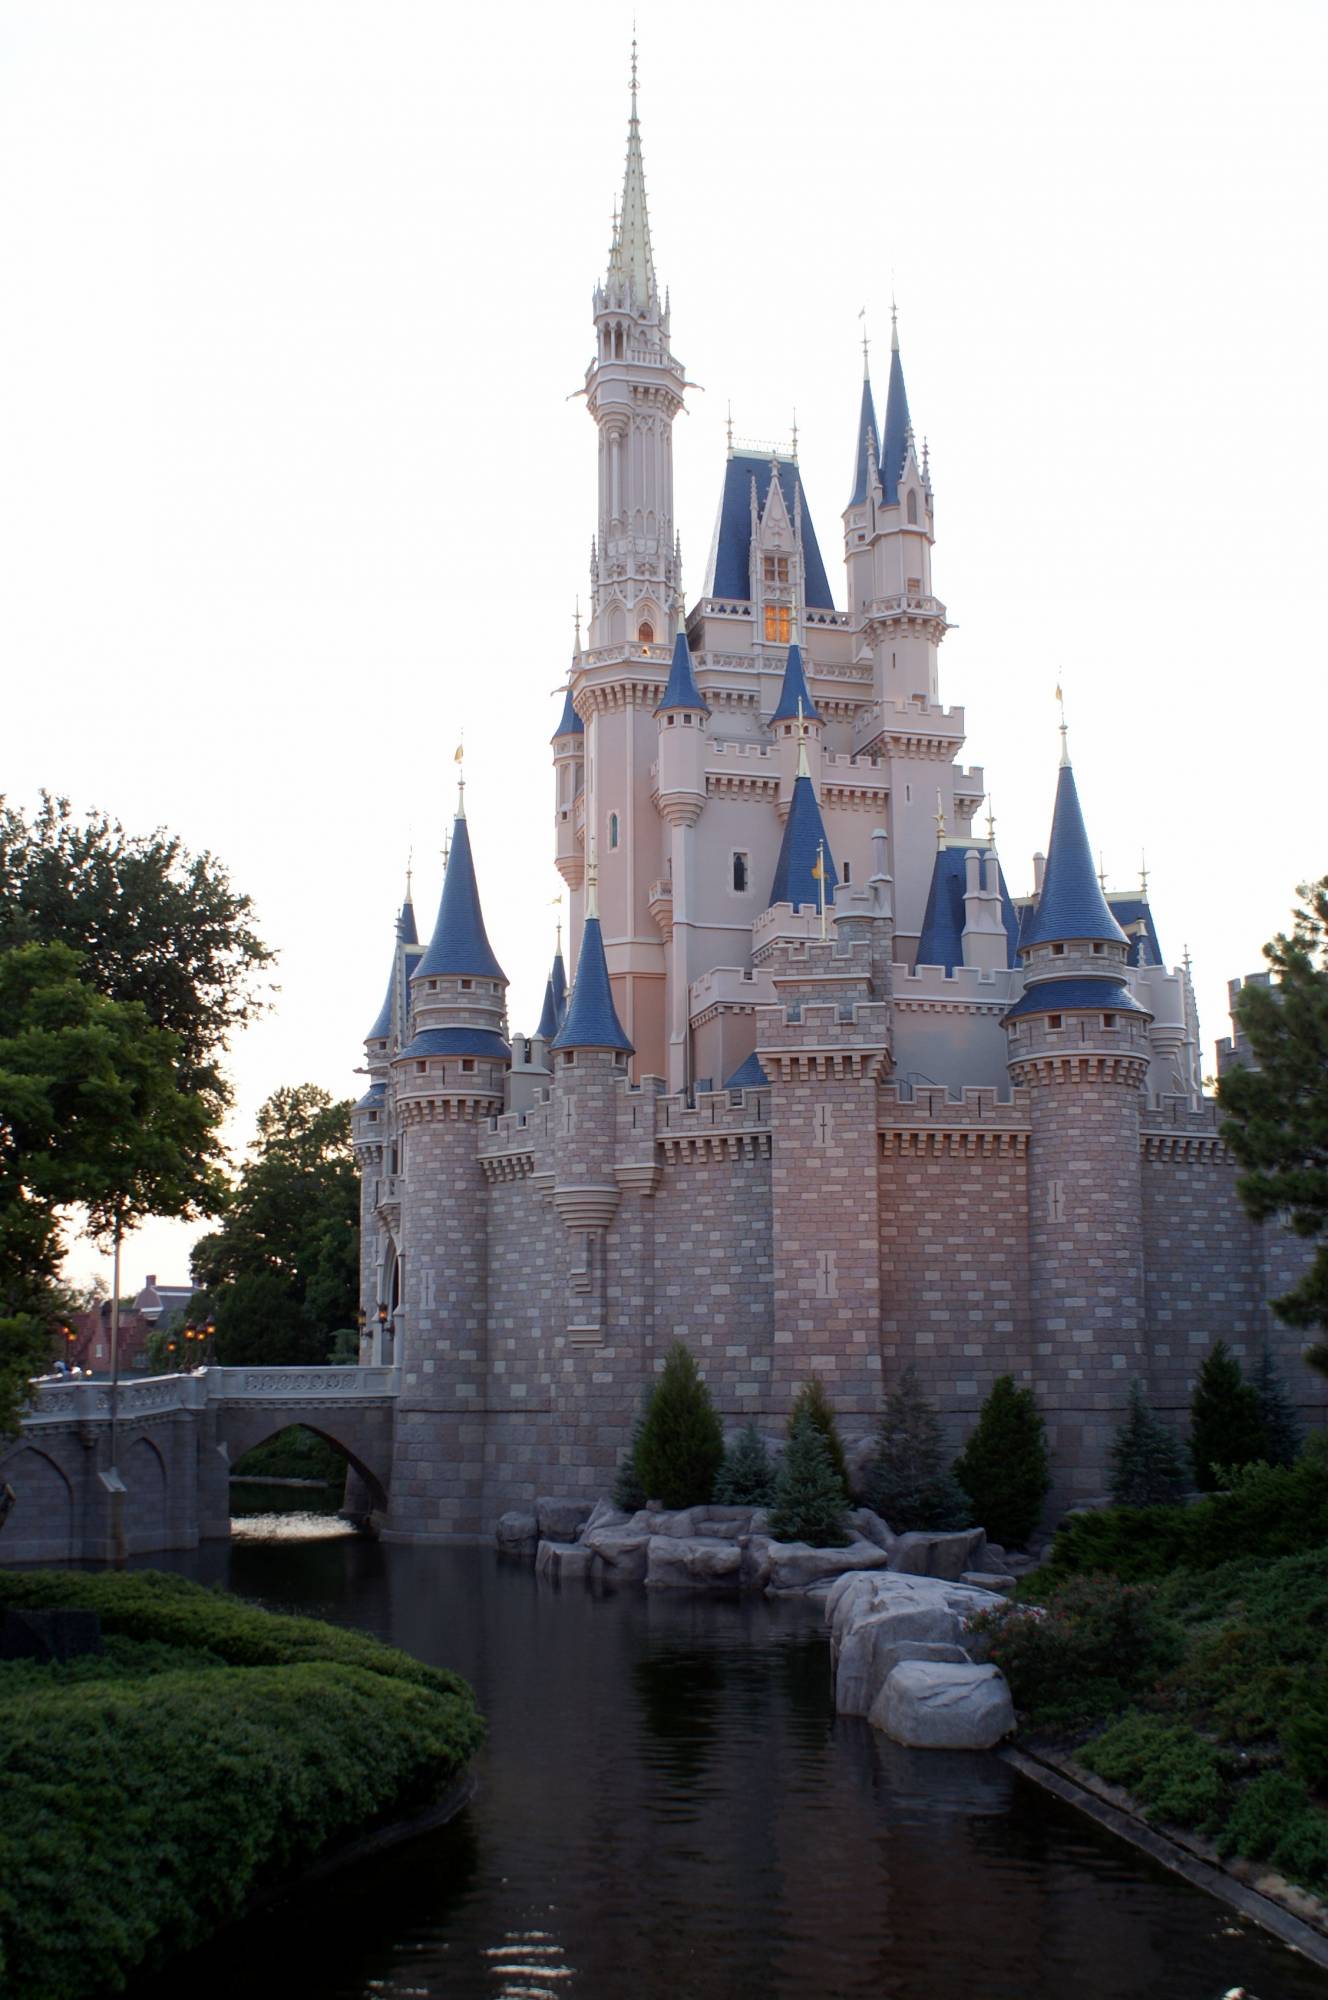 Cinderella's Castle from the Rose Garden Entrance